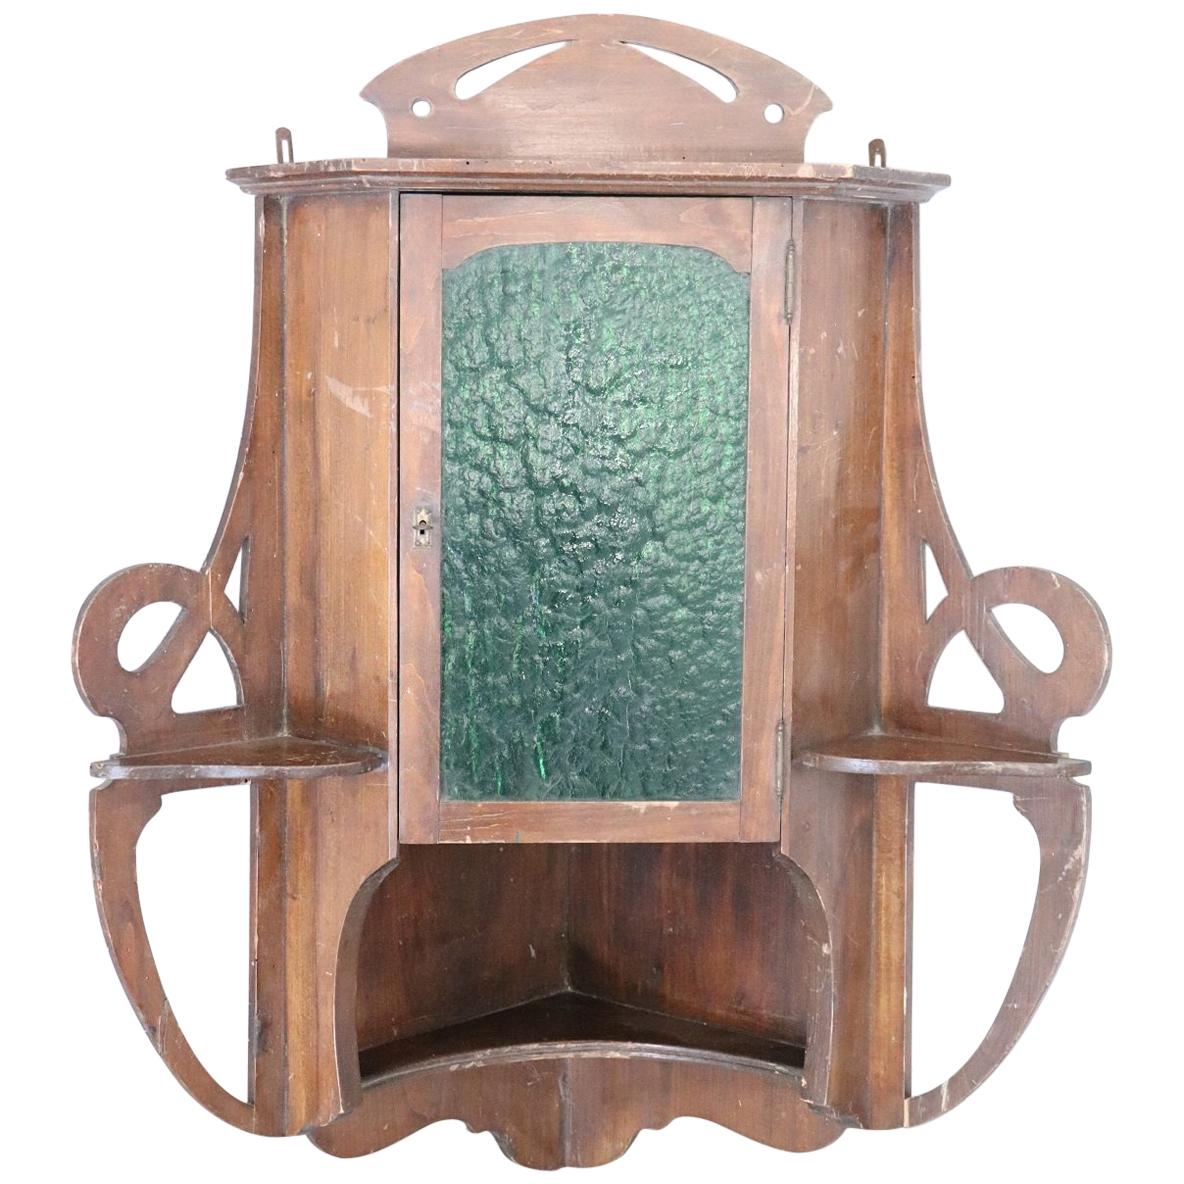 20th Century Art Nouveau Corner Cupboard or Corner Cabinet in Poplar Wood